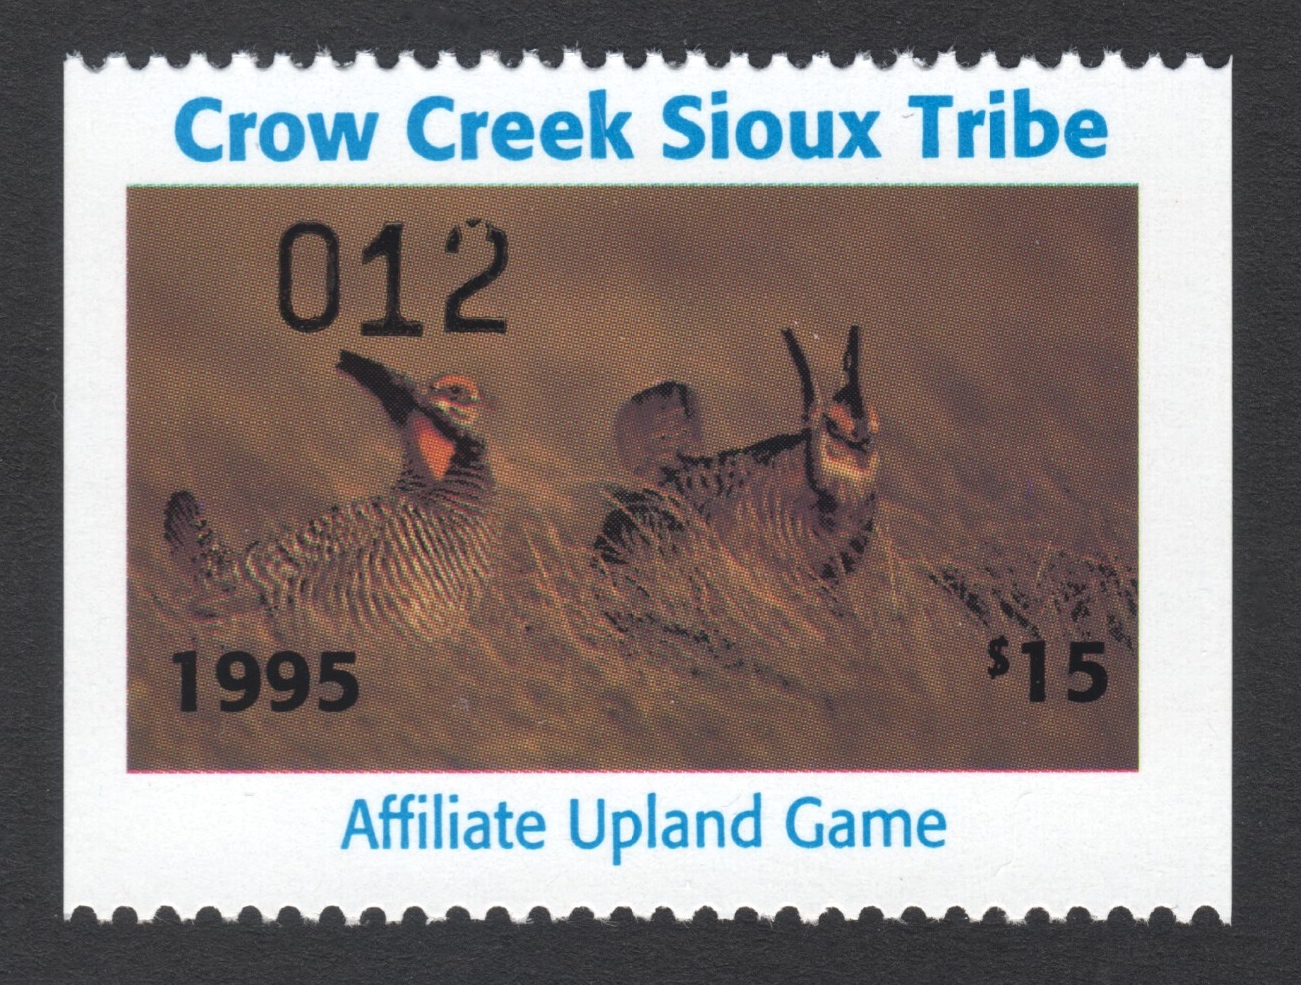 1995 Crow Creek Affiliate Upland Game